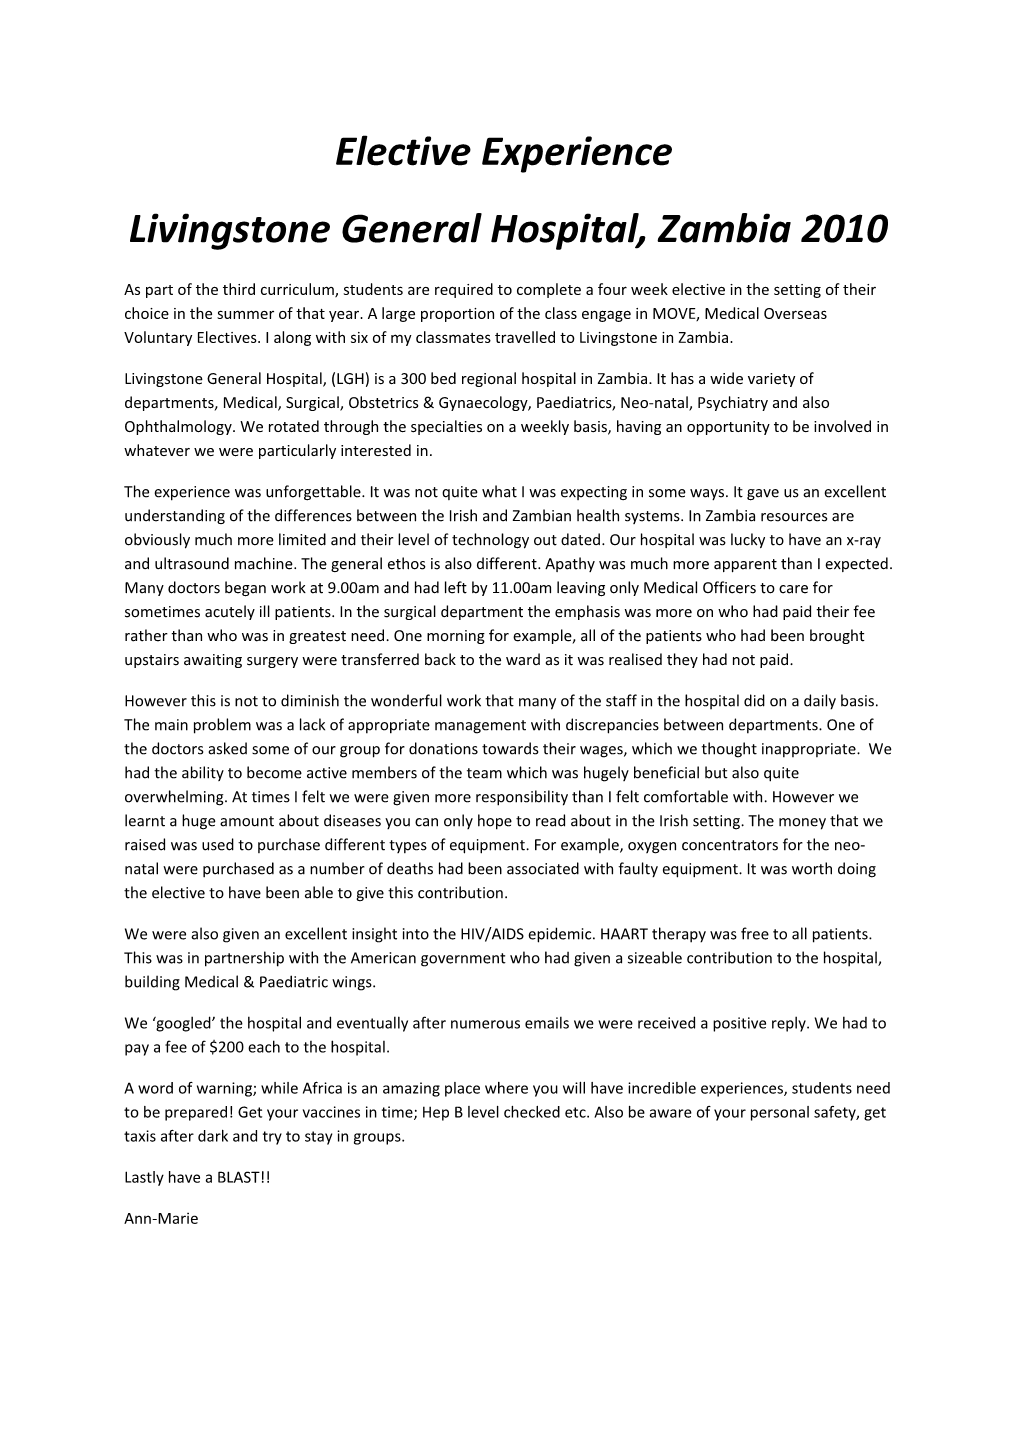 Livingstone General Hospital, Zambia 2010